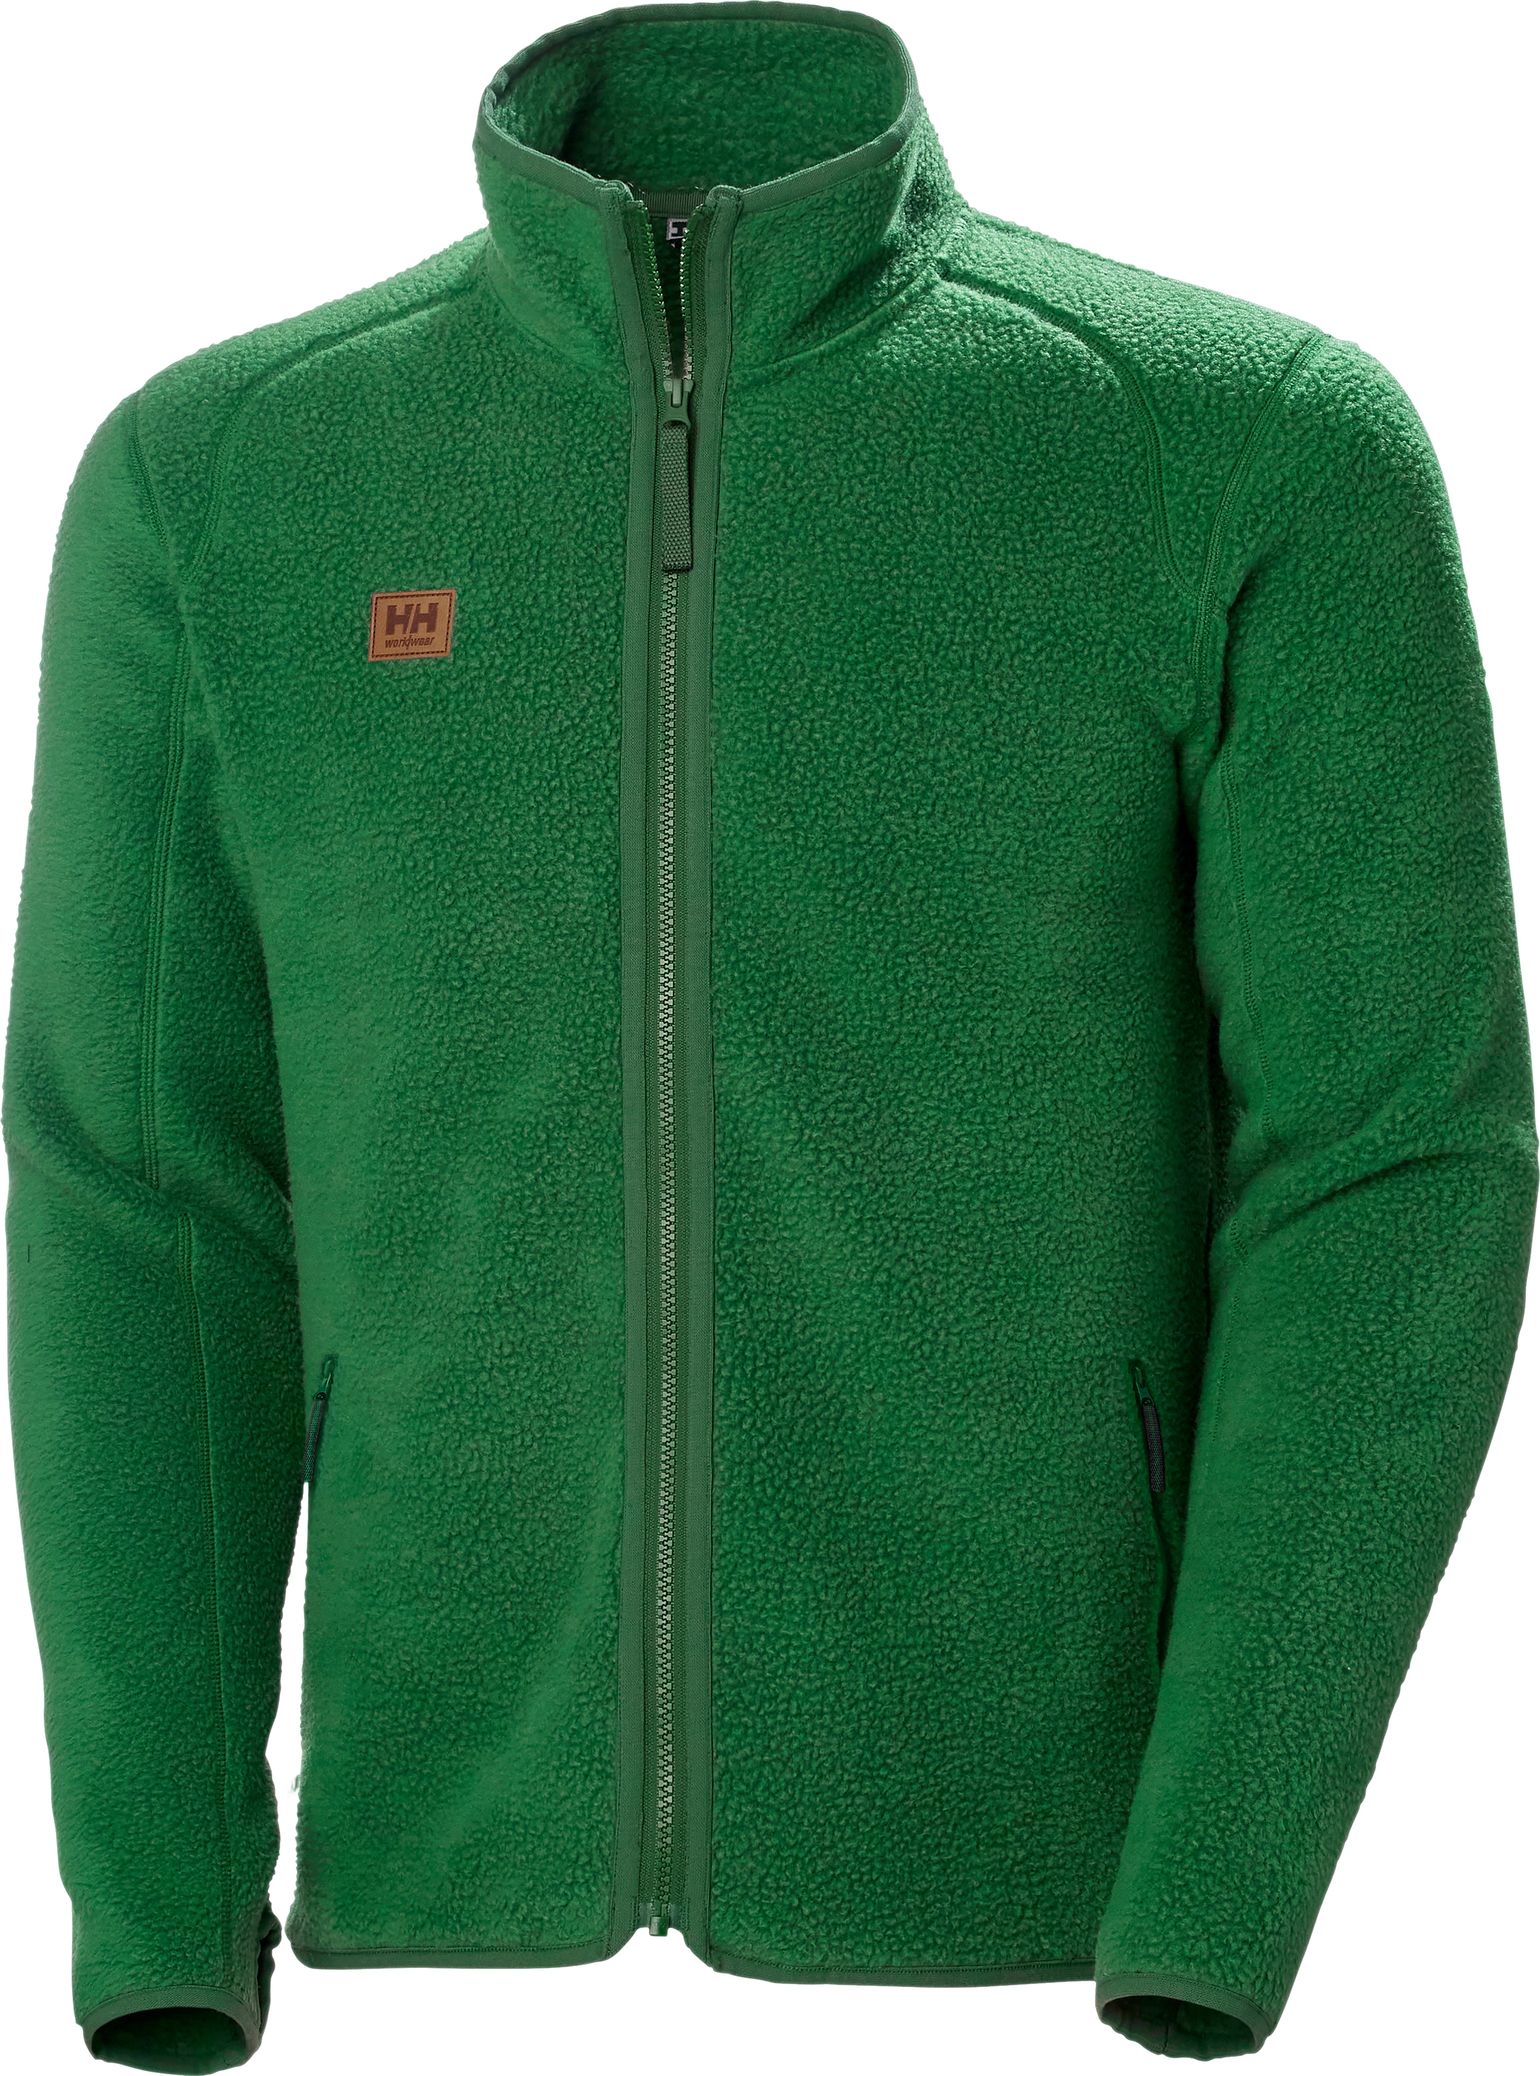 Helly Hansen Workwear Men's Heritage Pile Jacket Green